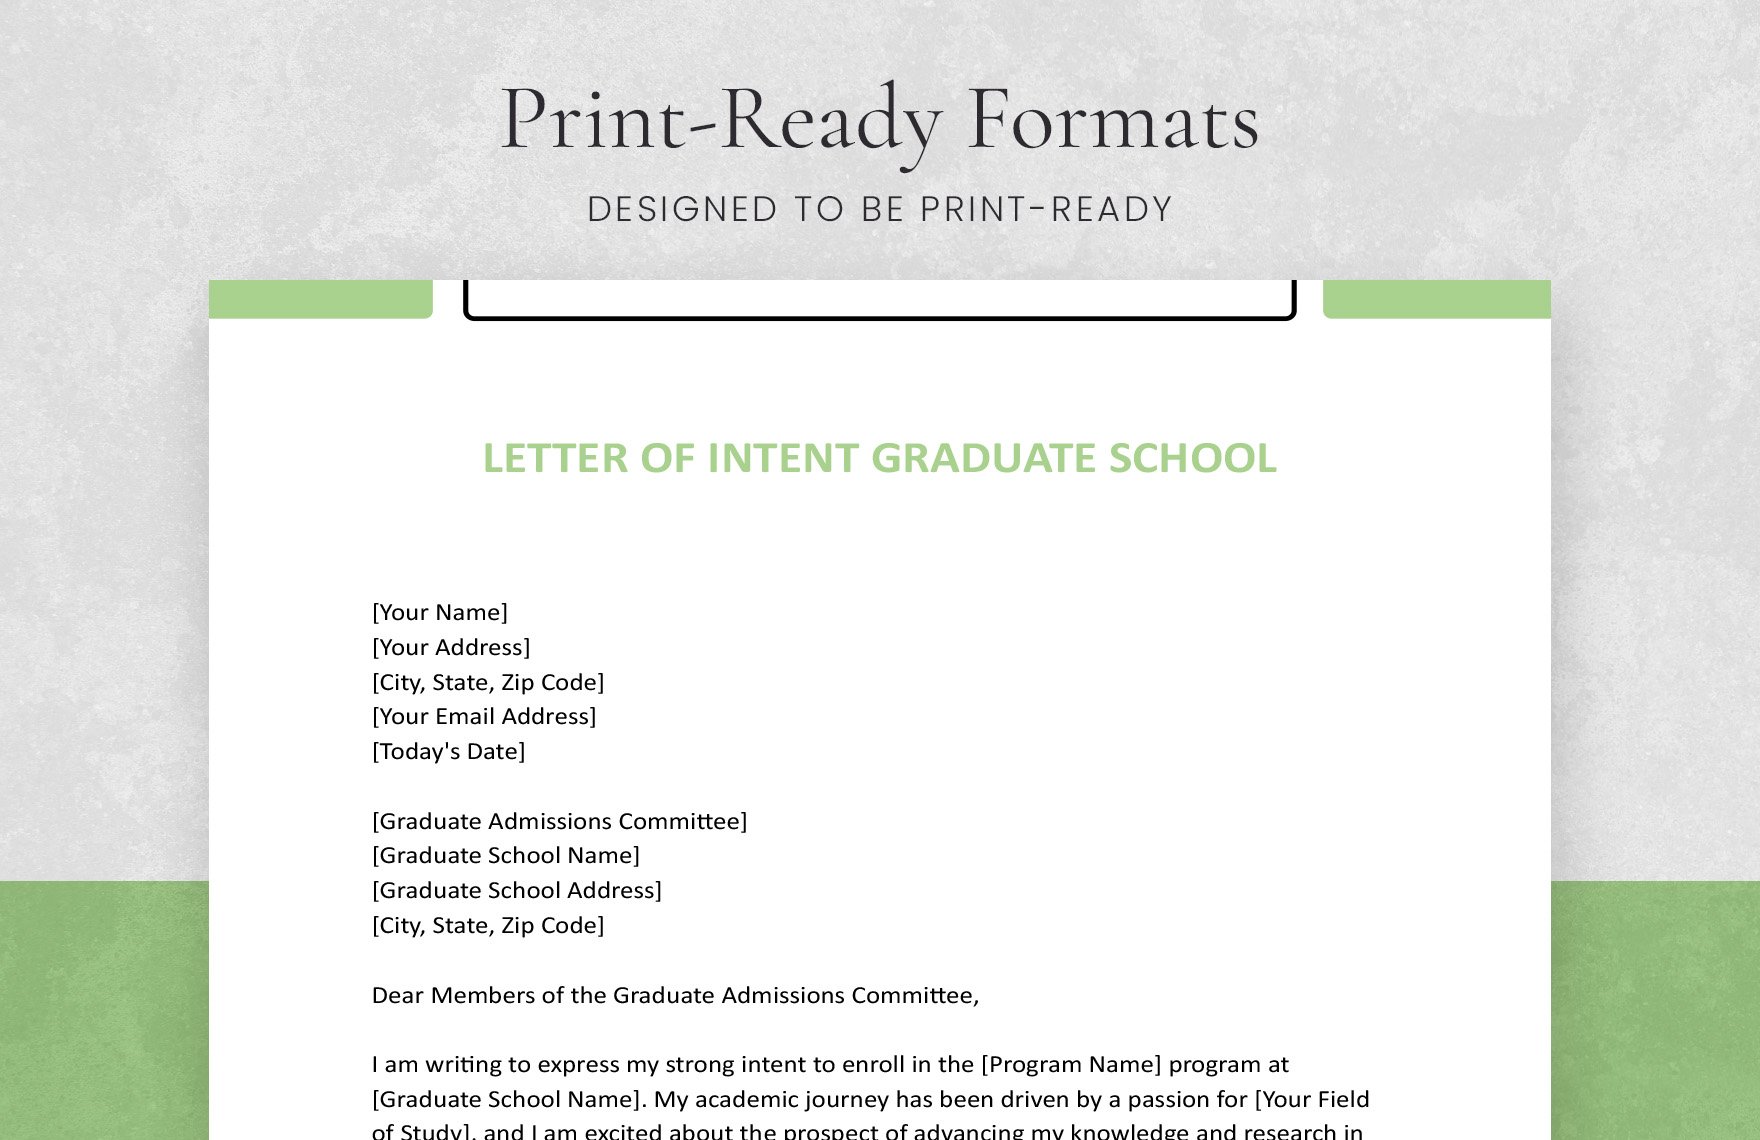 Letter of Intent Graduate School